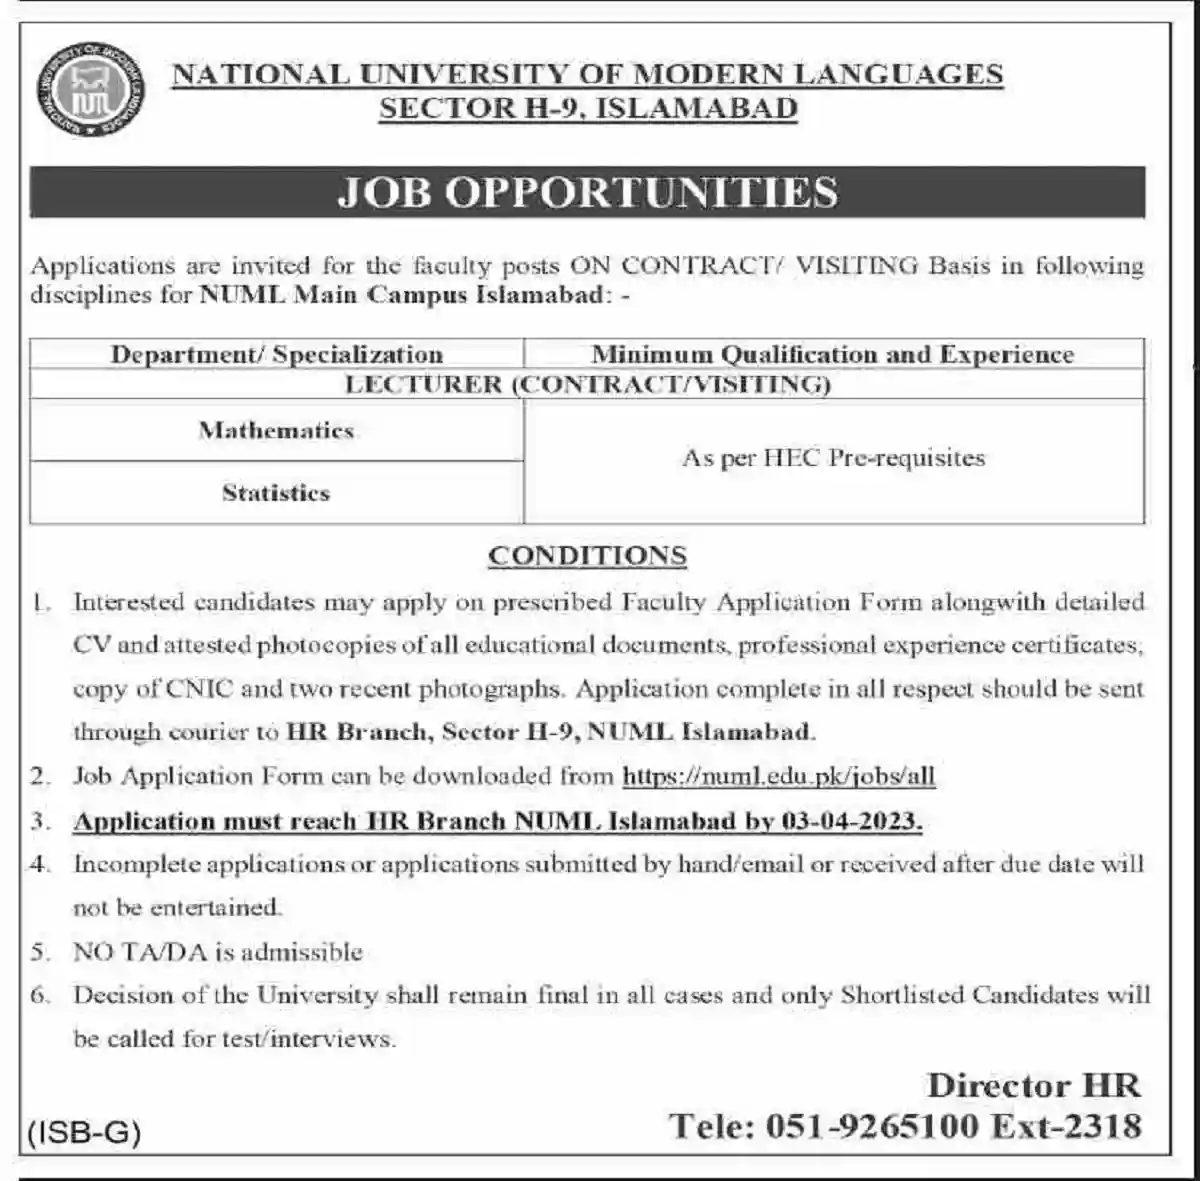 NUML University Jobs 2023 – National University of Modern Languages Jobs 2023